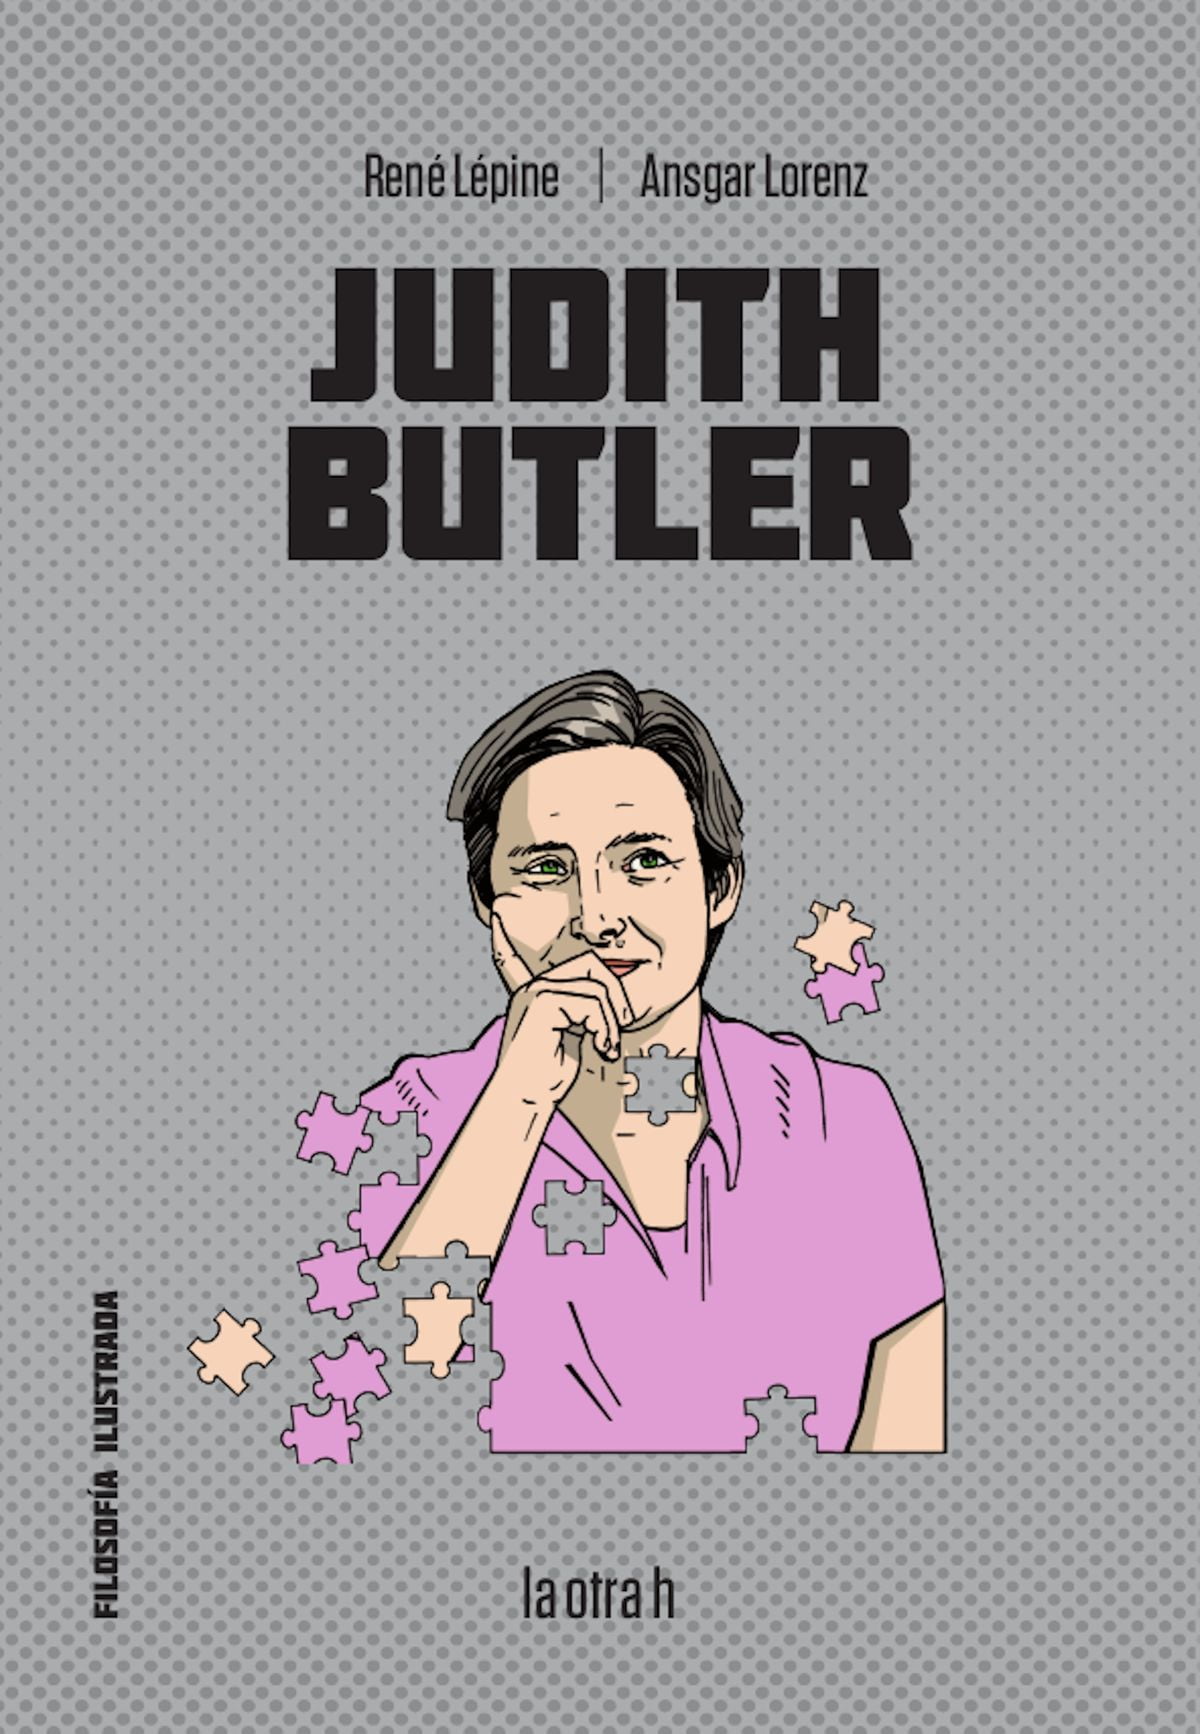 judith butler birthday